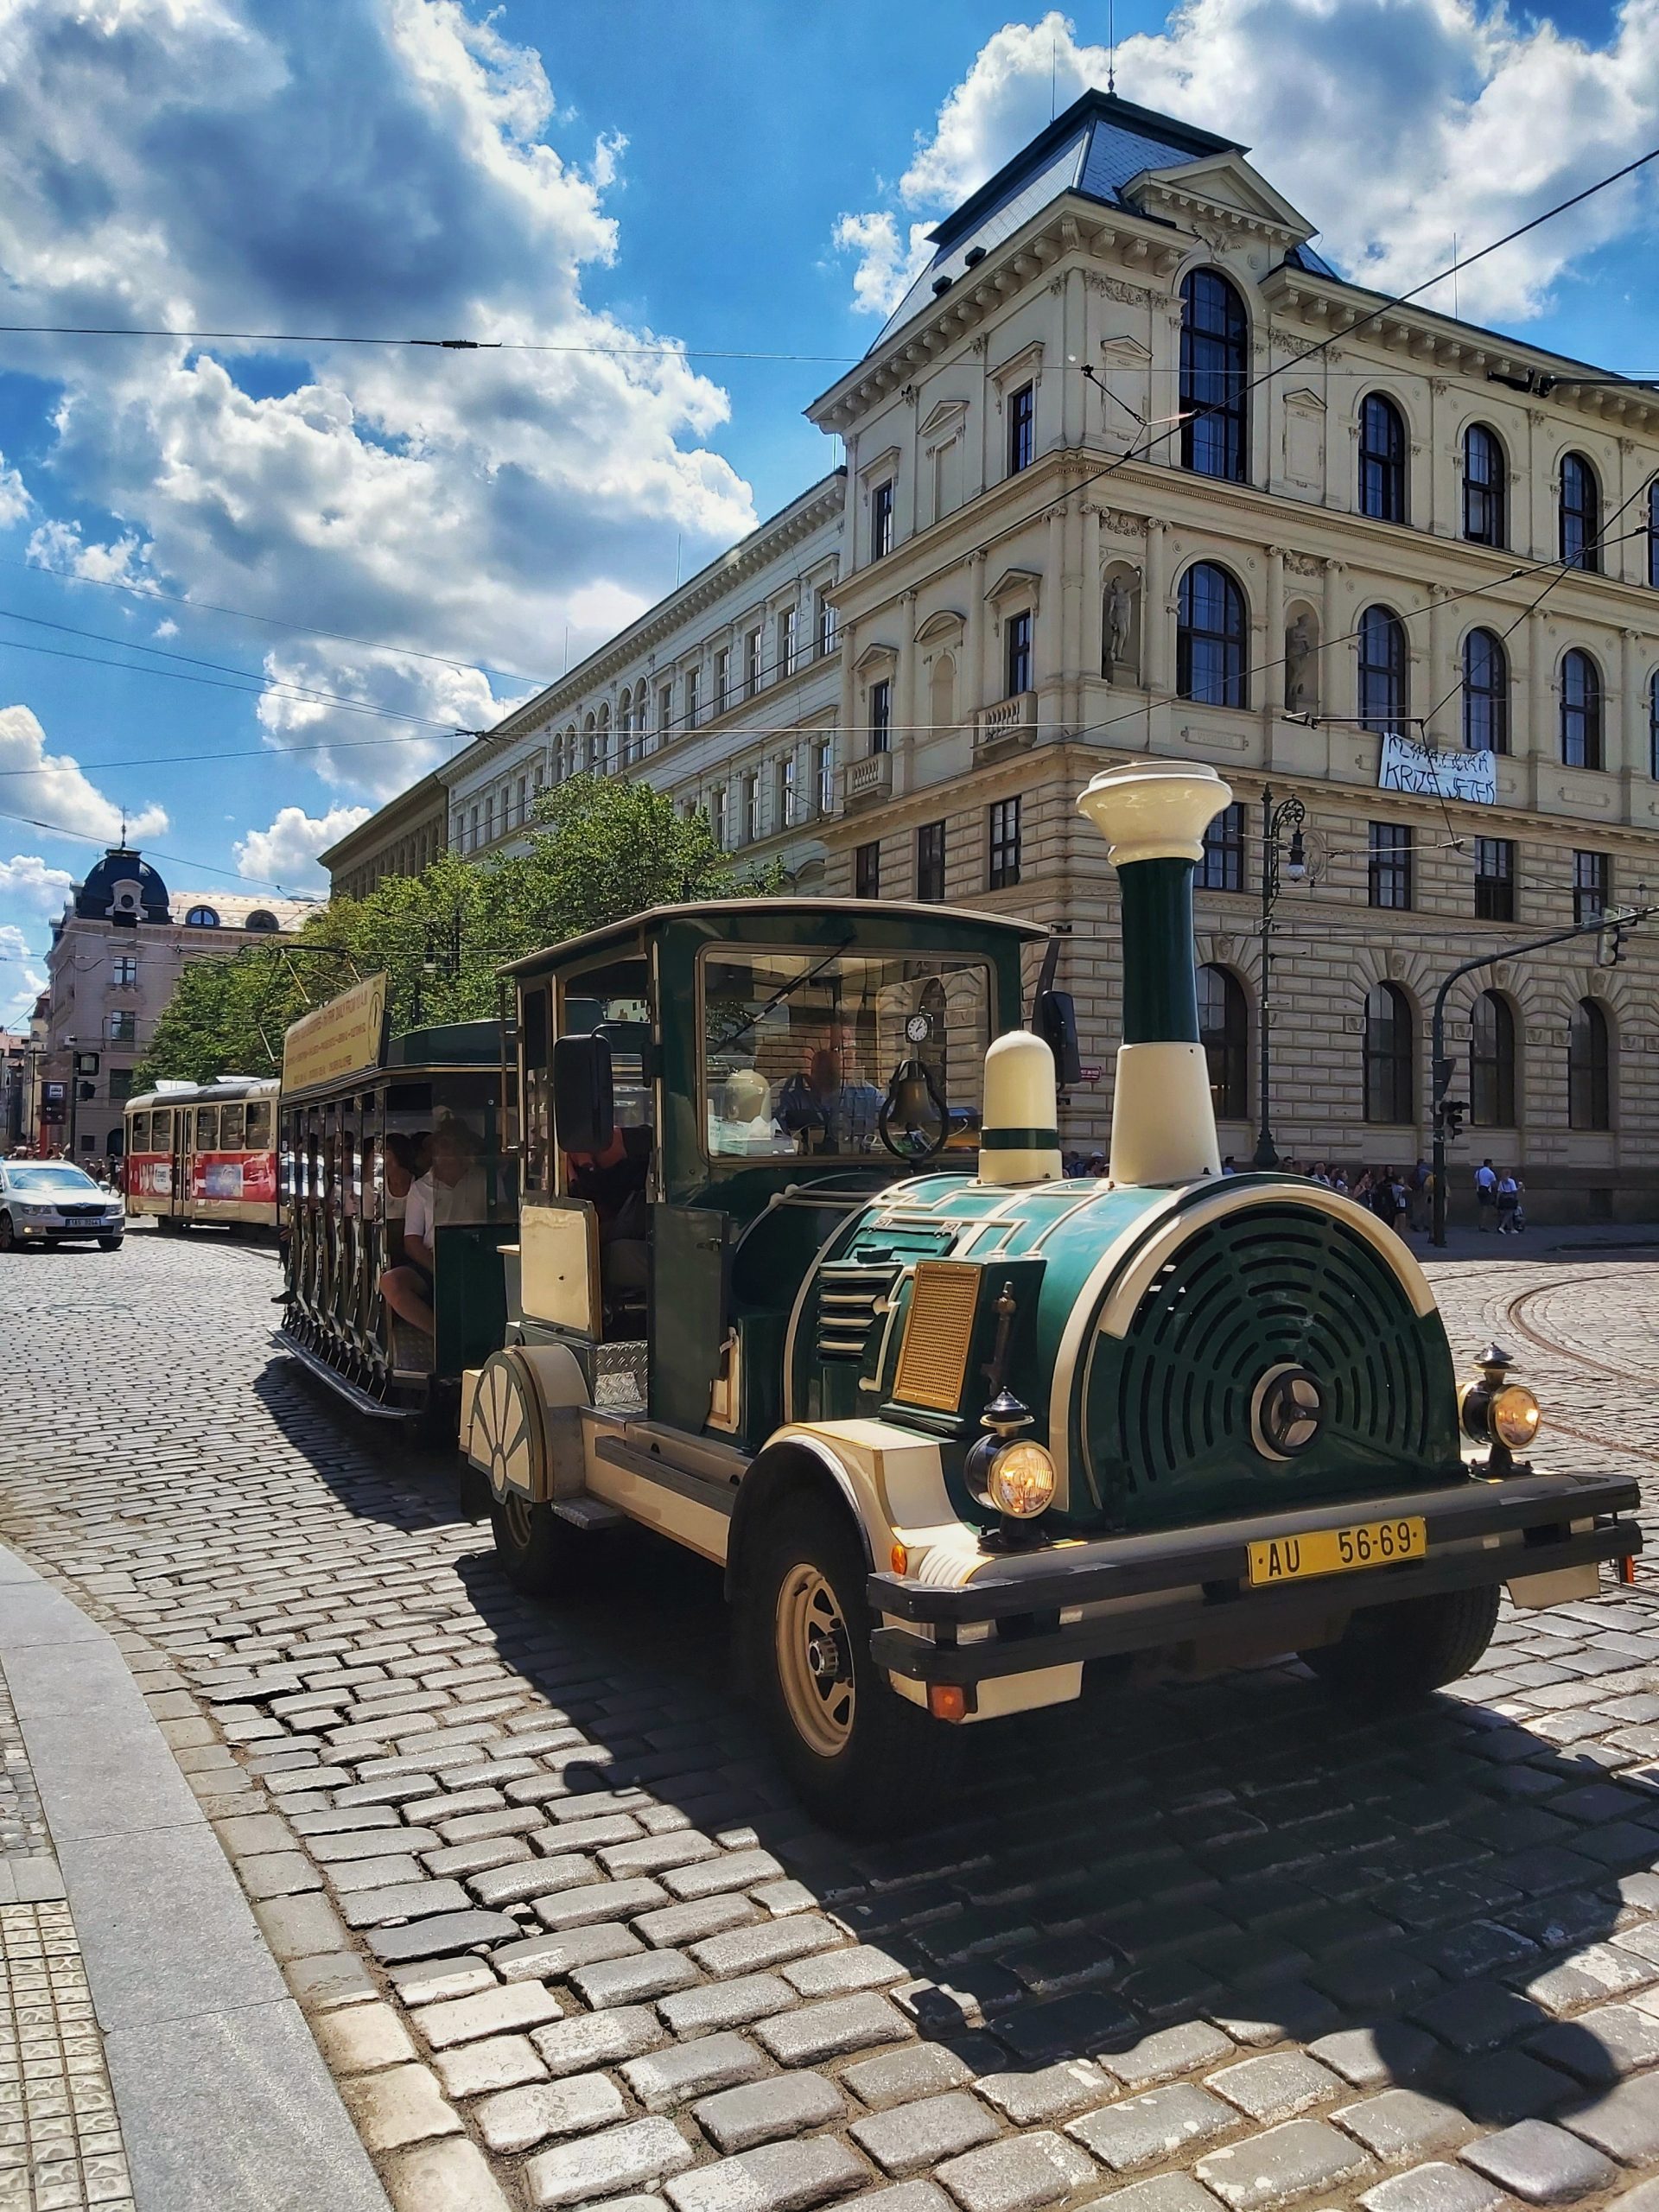 Fun Toy Train at Prague, Czech Republic